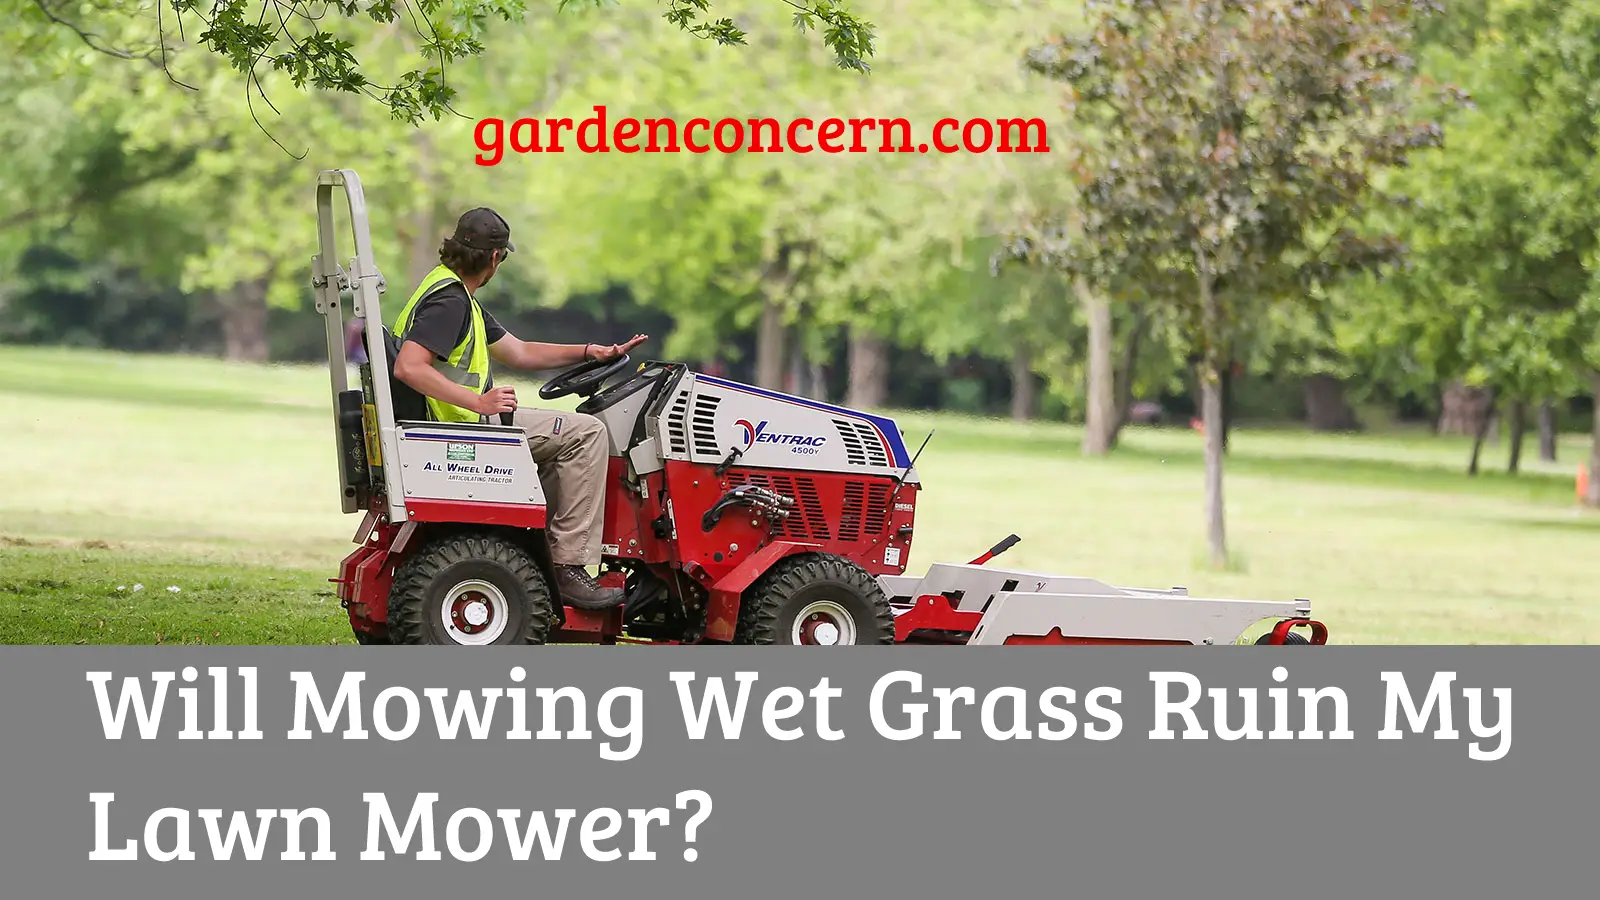 Will Mowing Wet Grass Ruin My Lawn Mower?